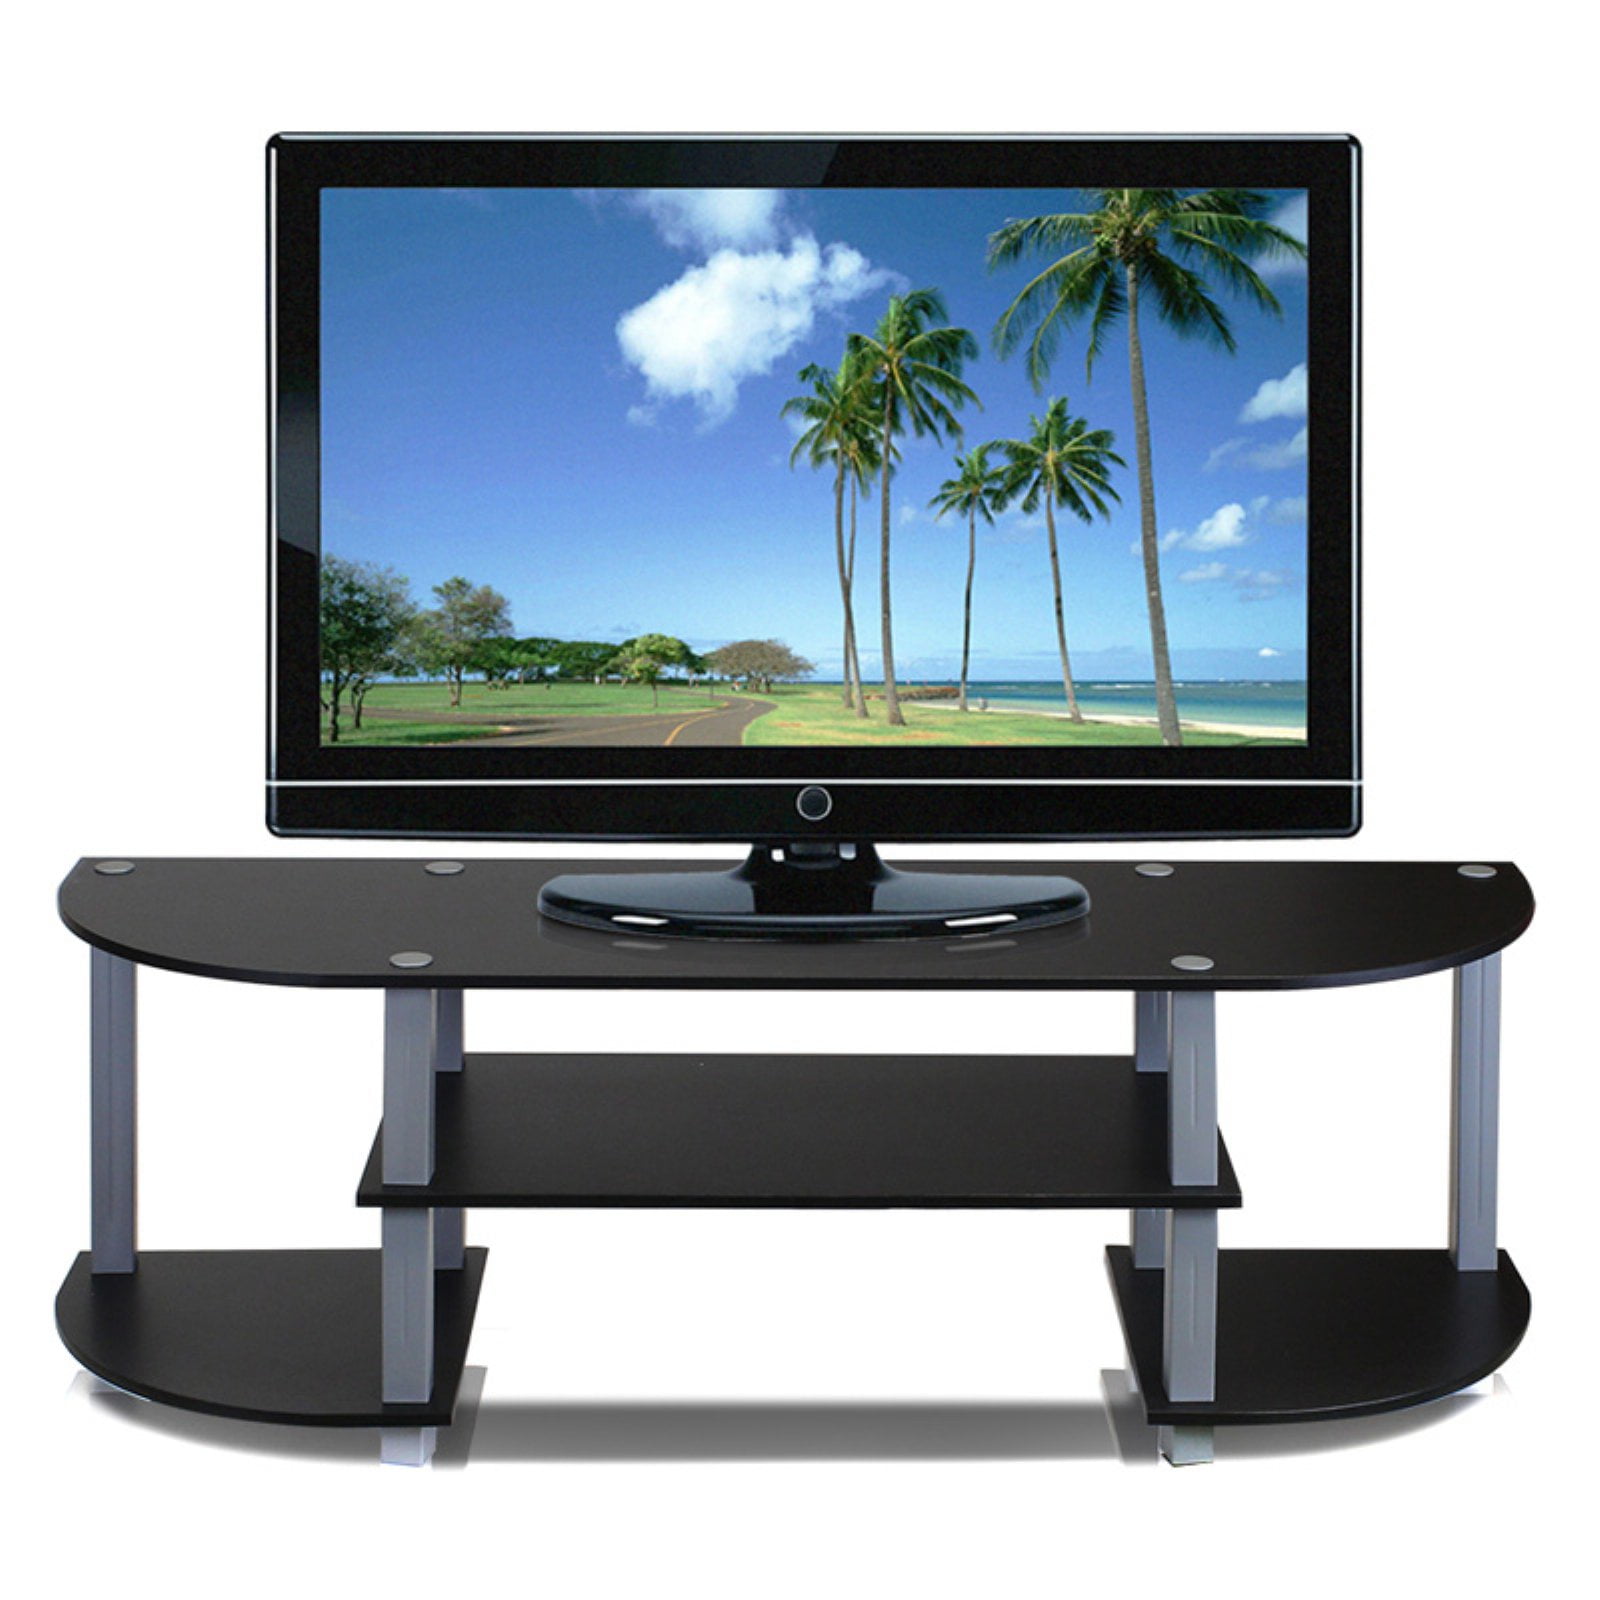 x 37.1 Engineered Wood Furinno Entertainment Center Stand Unit/TV Desk H W D 60.2 cm Americano/Chrome x 58.9 